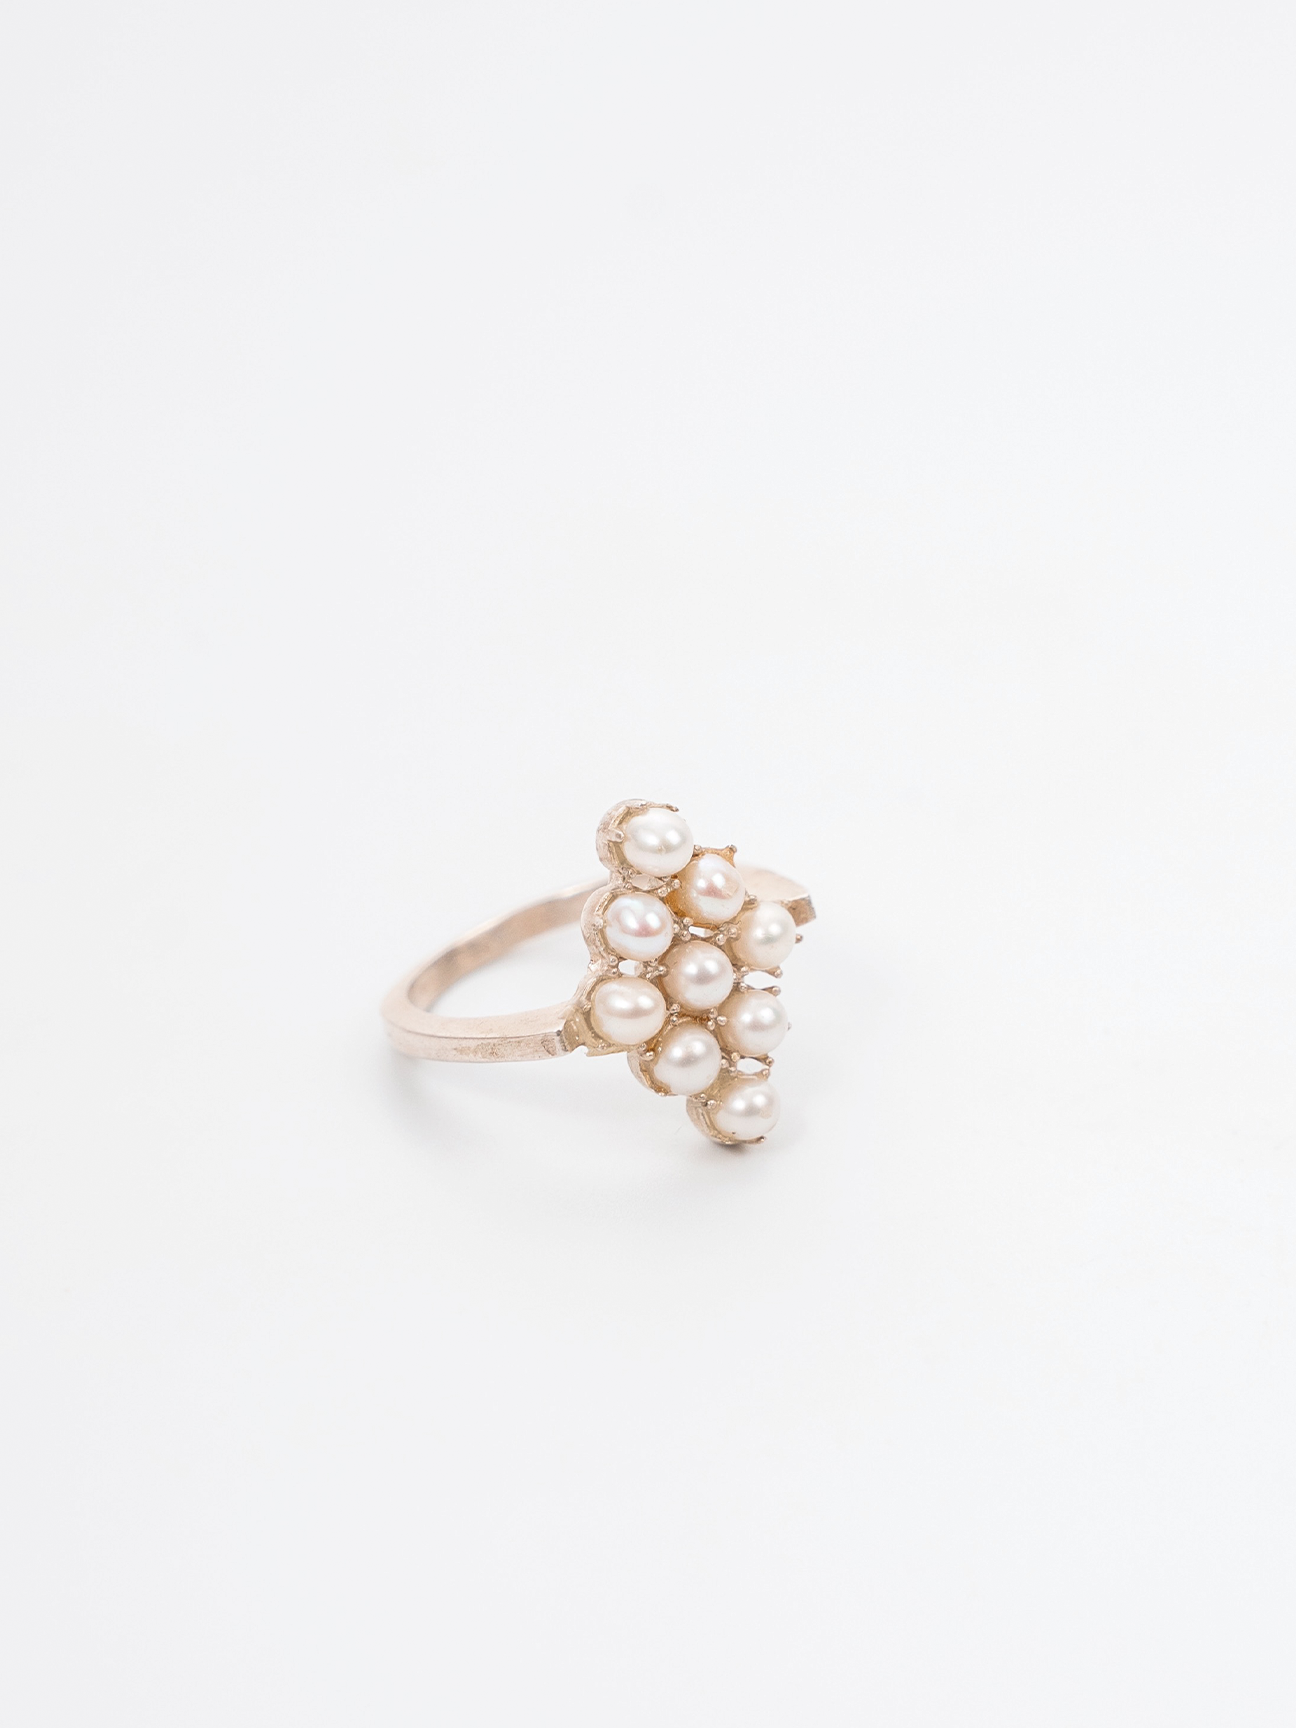 The Naumoti Ring Cultured Pearl